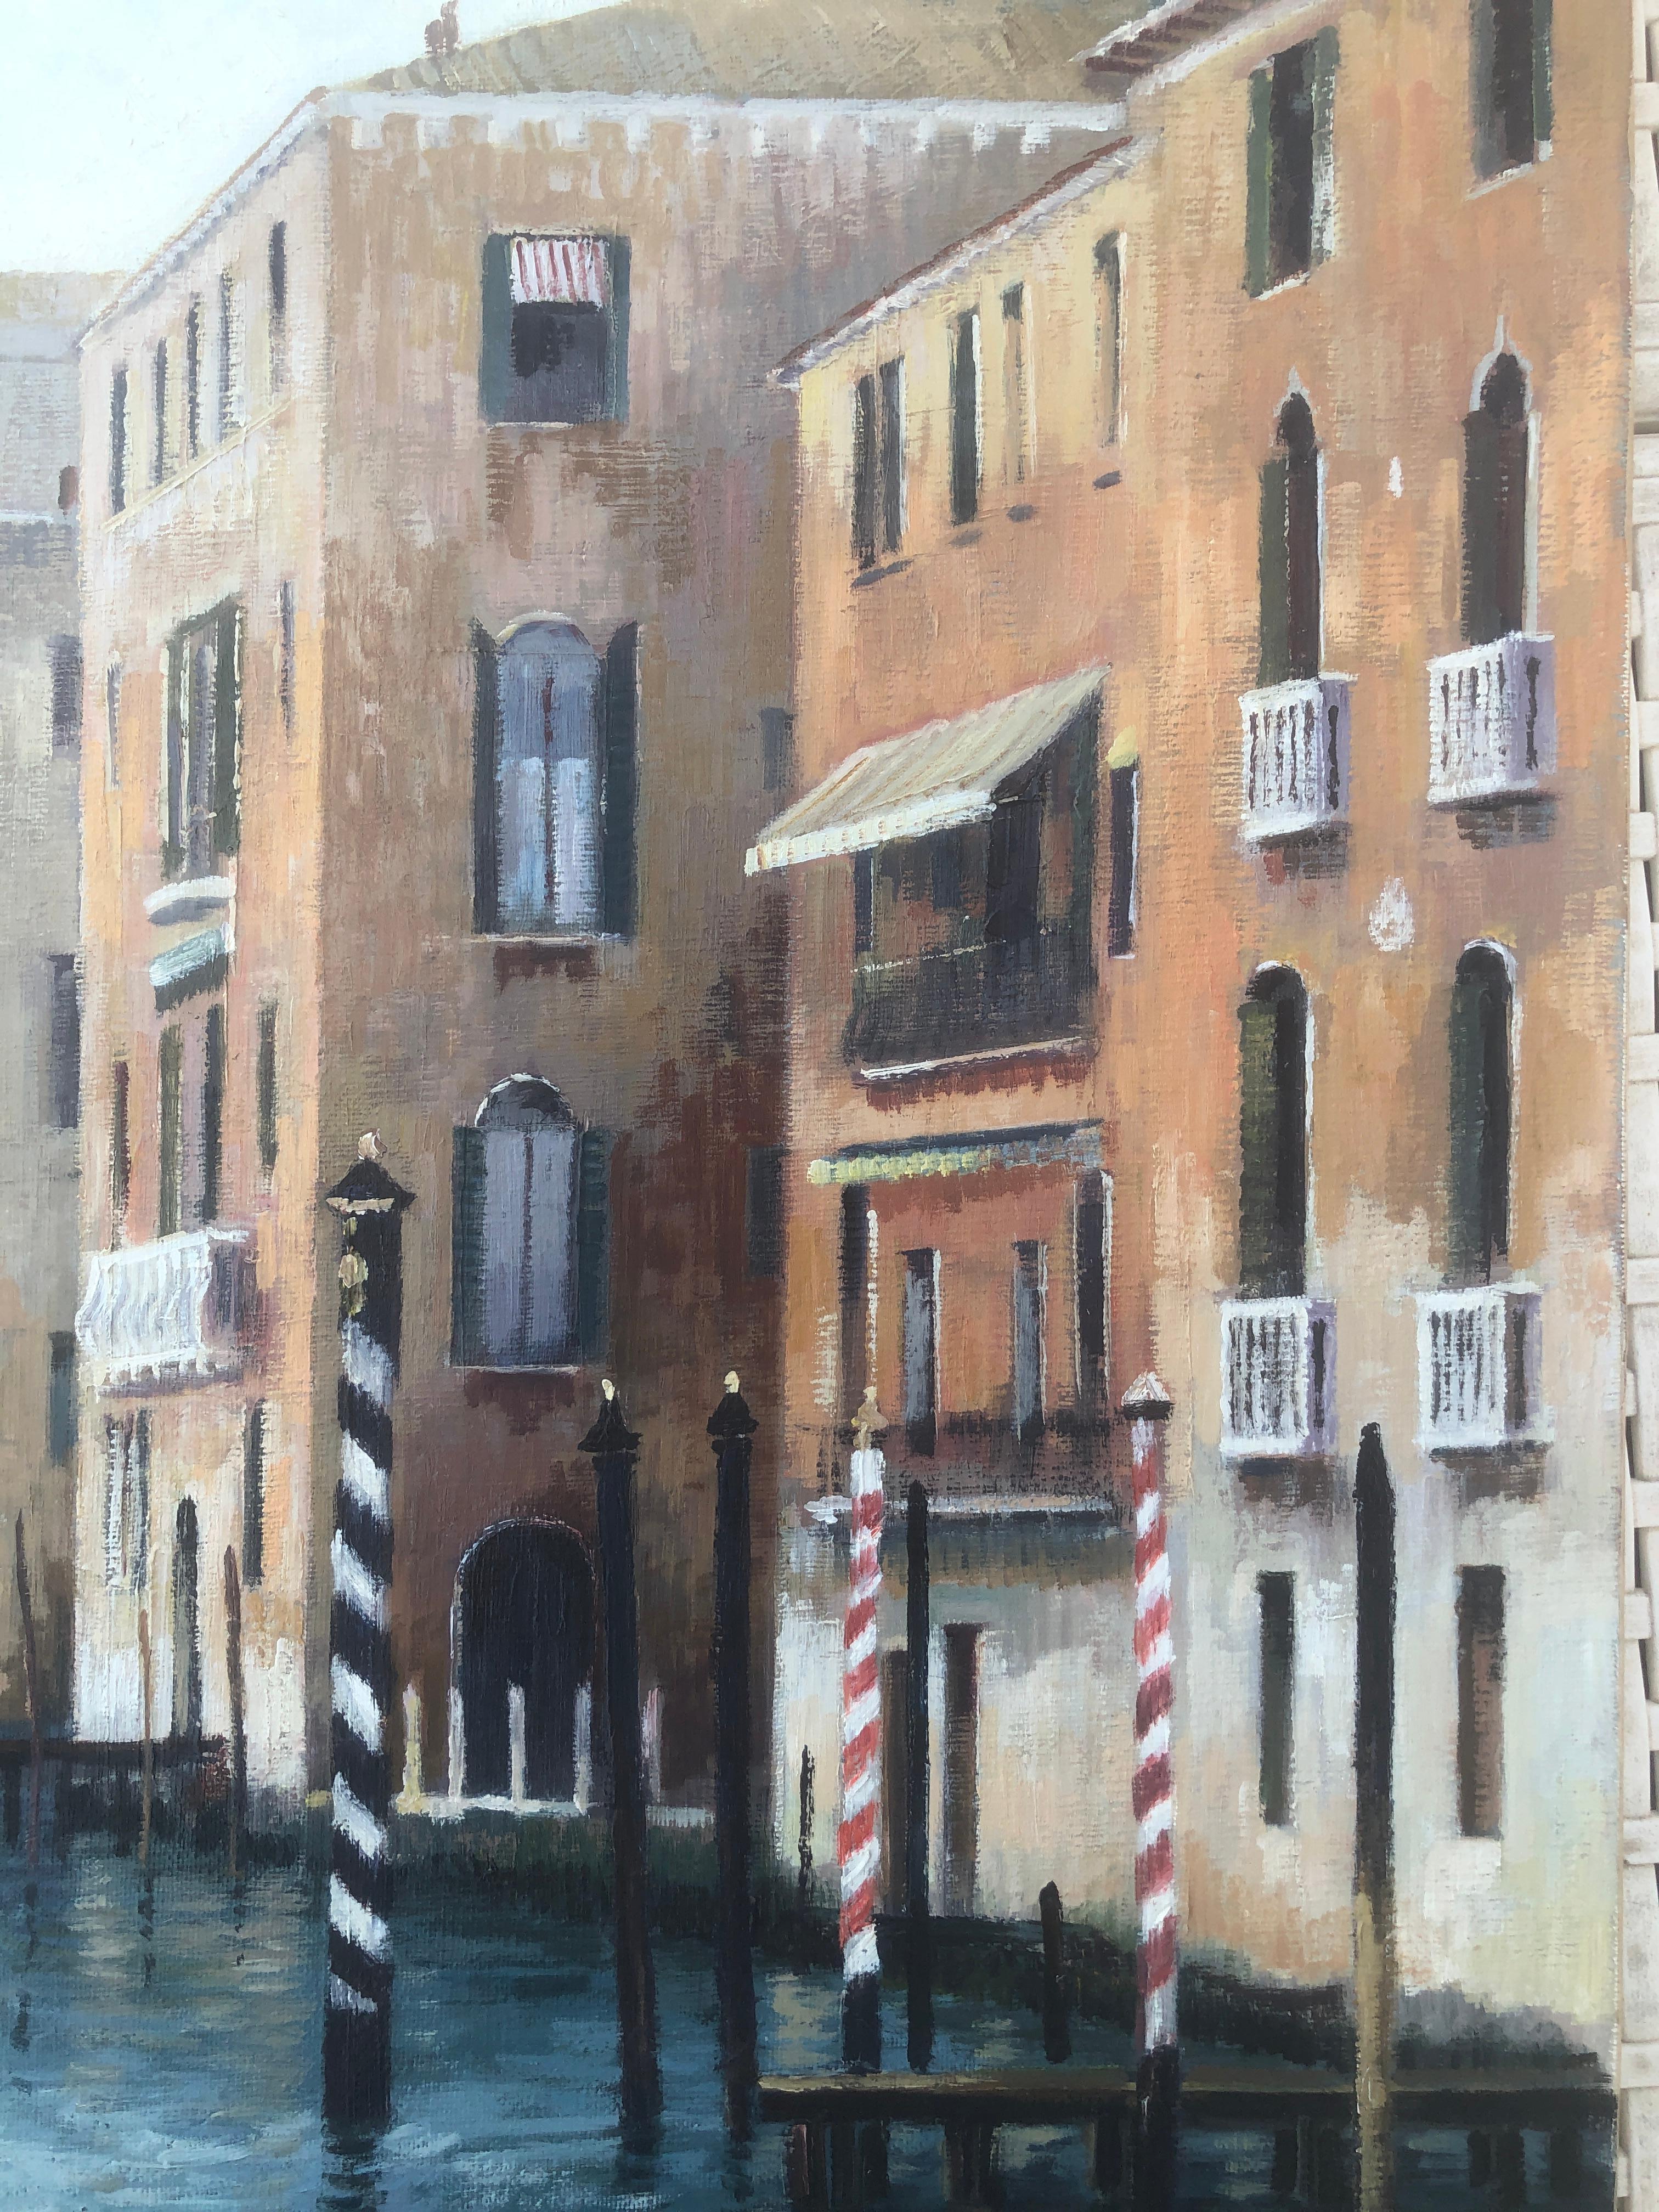 Josep Maria Vayreda Canadell (1932-2001) - Venice Italy - Oil canvas
Oil measures 55x46 cm.
Frameless.

Josep Maria Vayreda Canadell
Year of birth: 1932
Biography:
Member of a family spanish saga of artists, which highlighted Joaquim Vayreda,